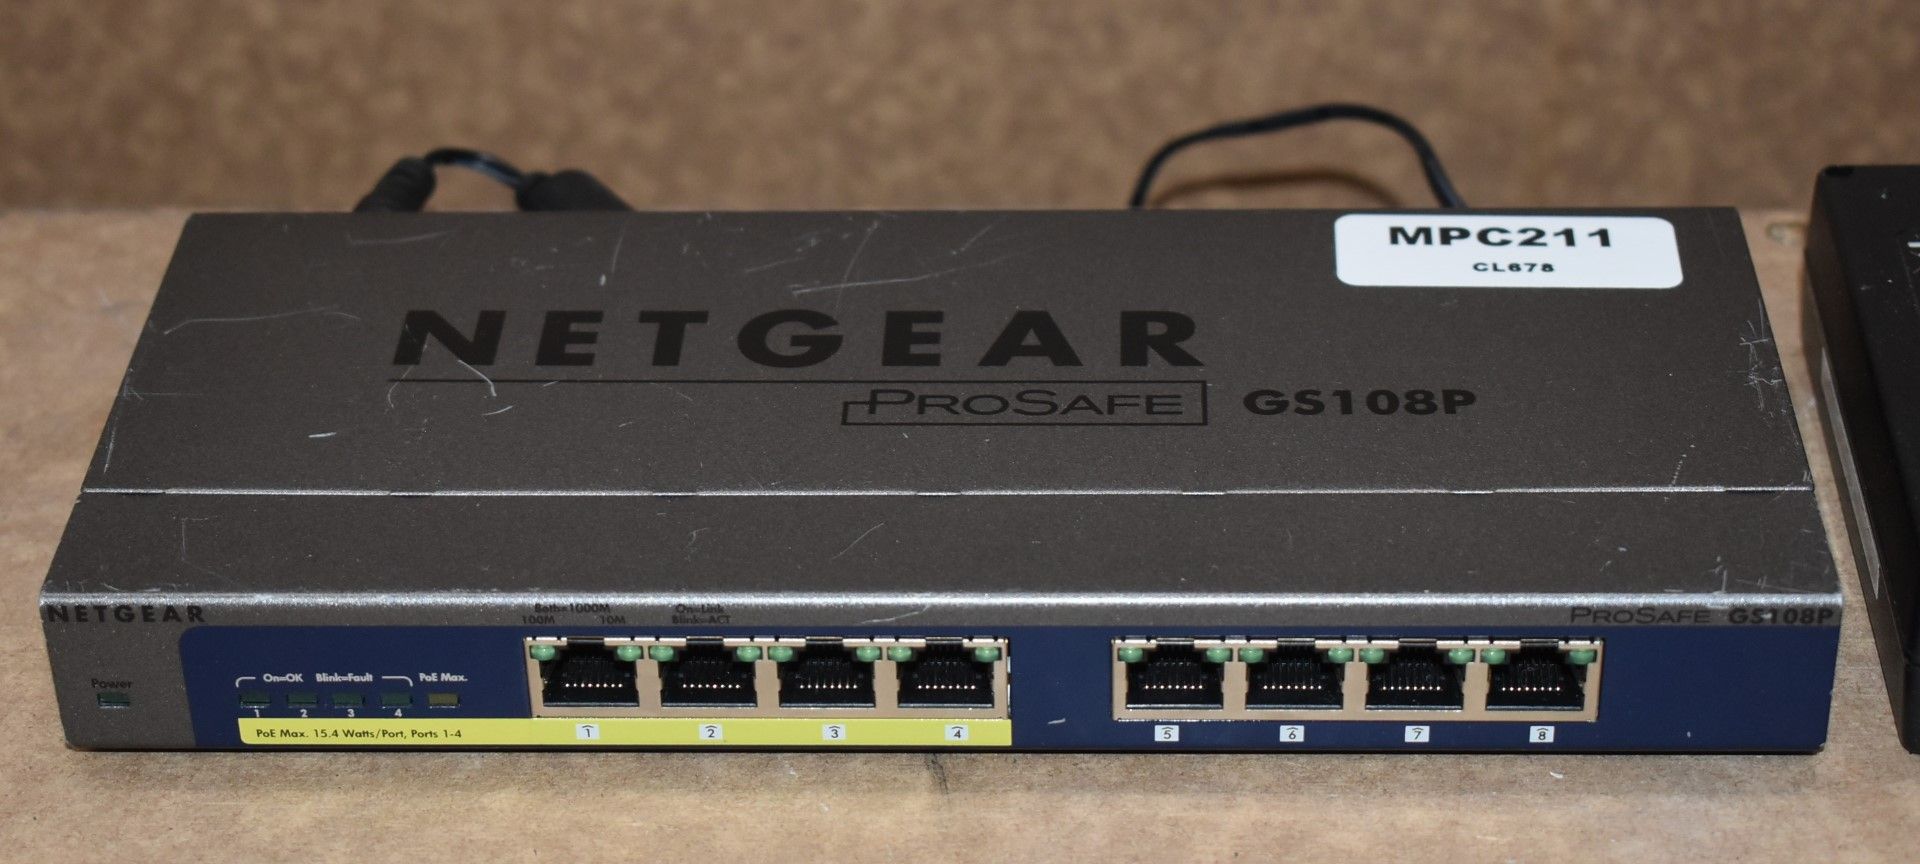 1 x Netgear GS108P ProSafe 8 Port Gigabit Switch with PoE - Ref: MPC211 P1 - CL678 - Location: - Image 3 of 6